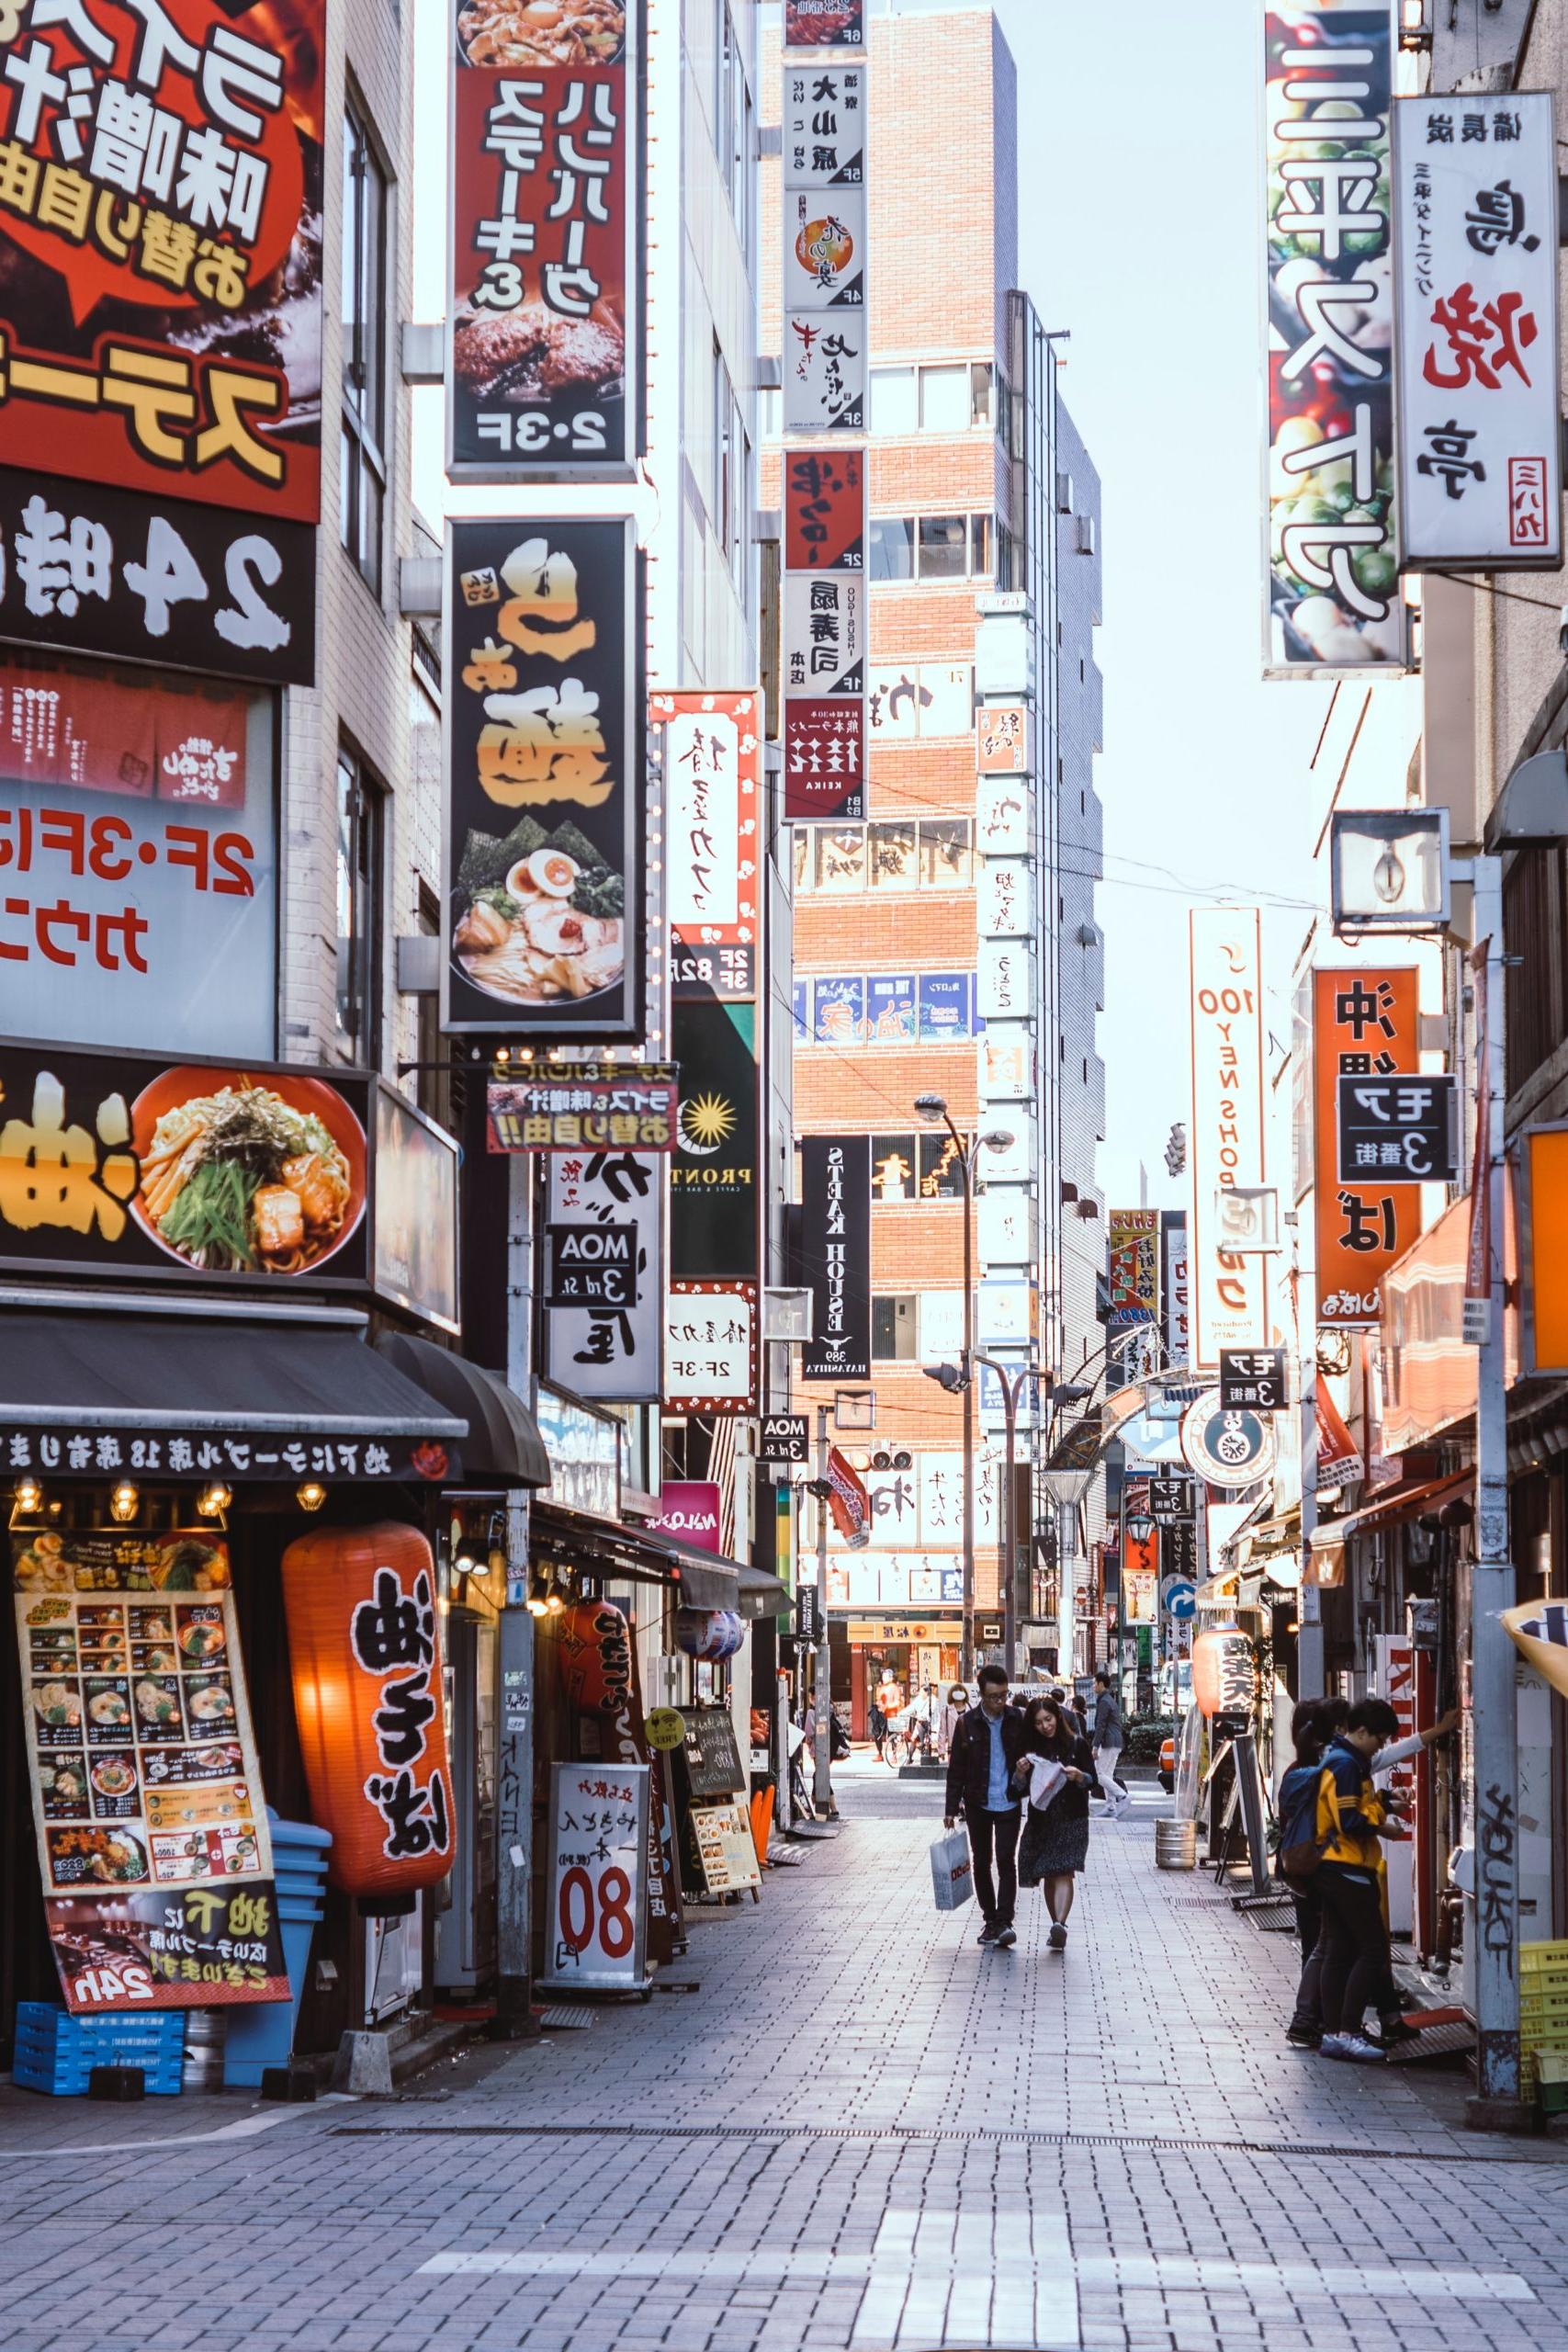 Photo of a side street in Japan